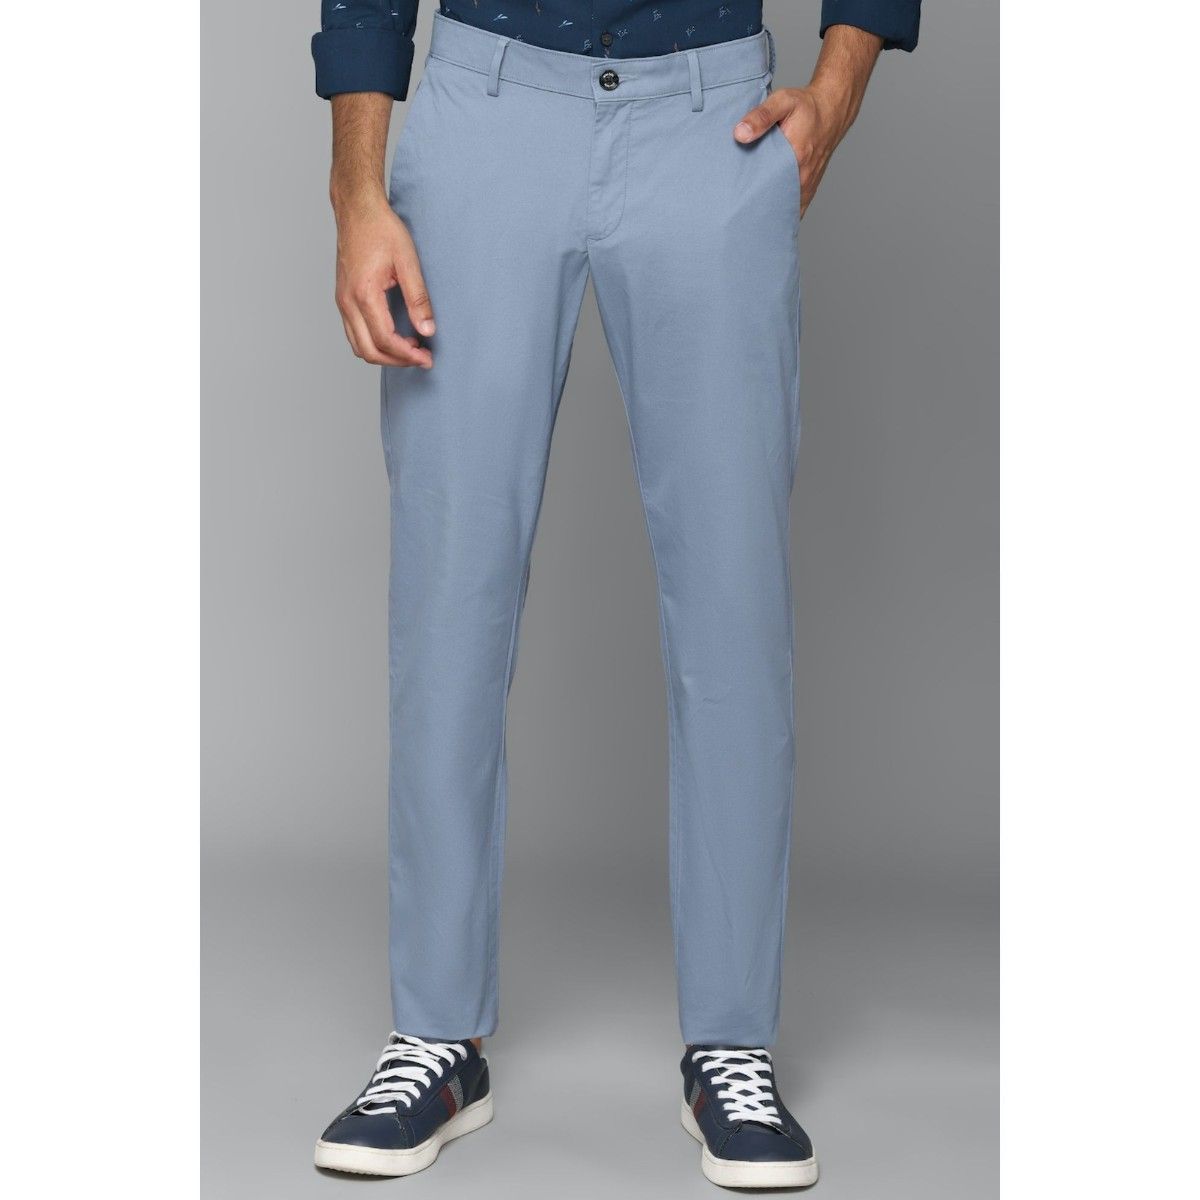 Buy Men Black Regular Fit Solid Casual Trousers Online - 784509 | Allen  Solly